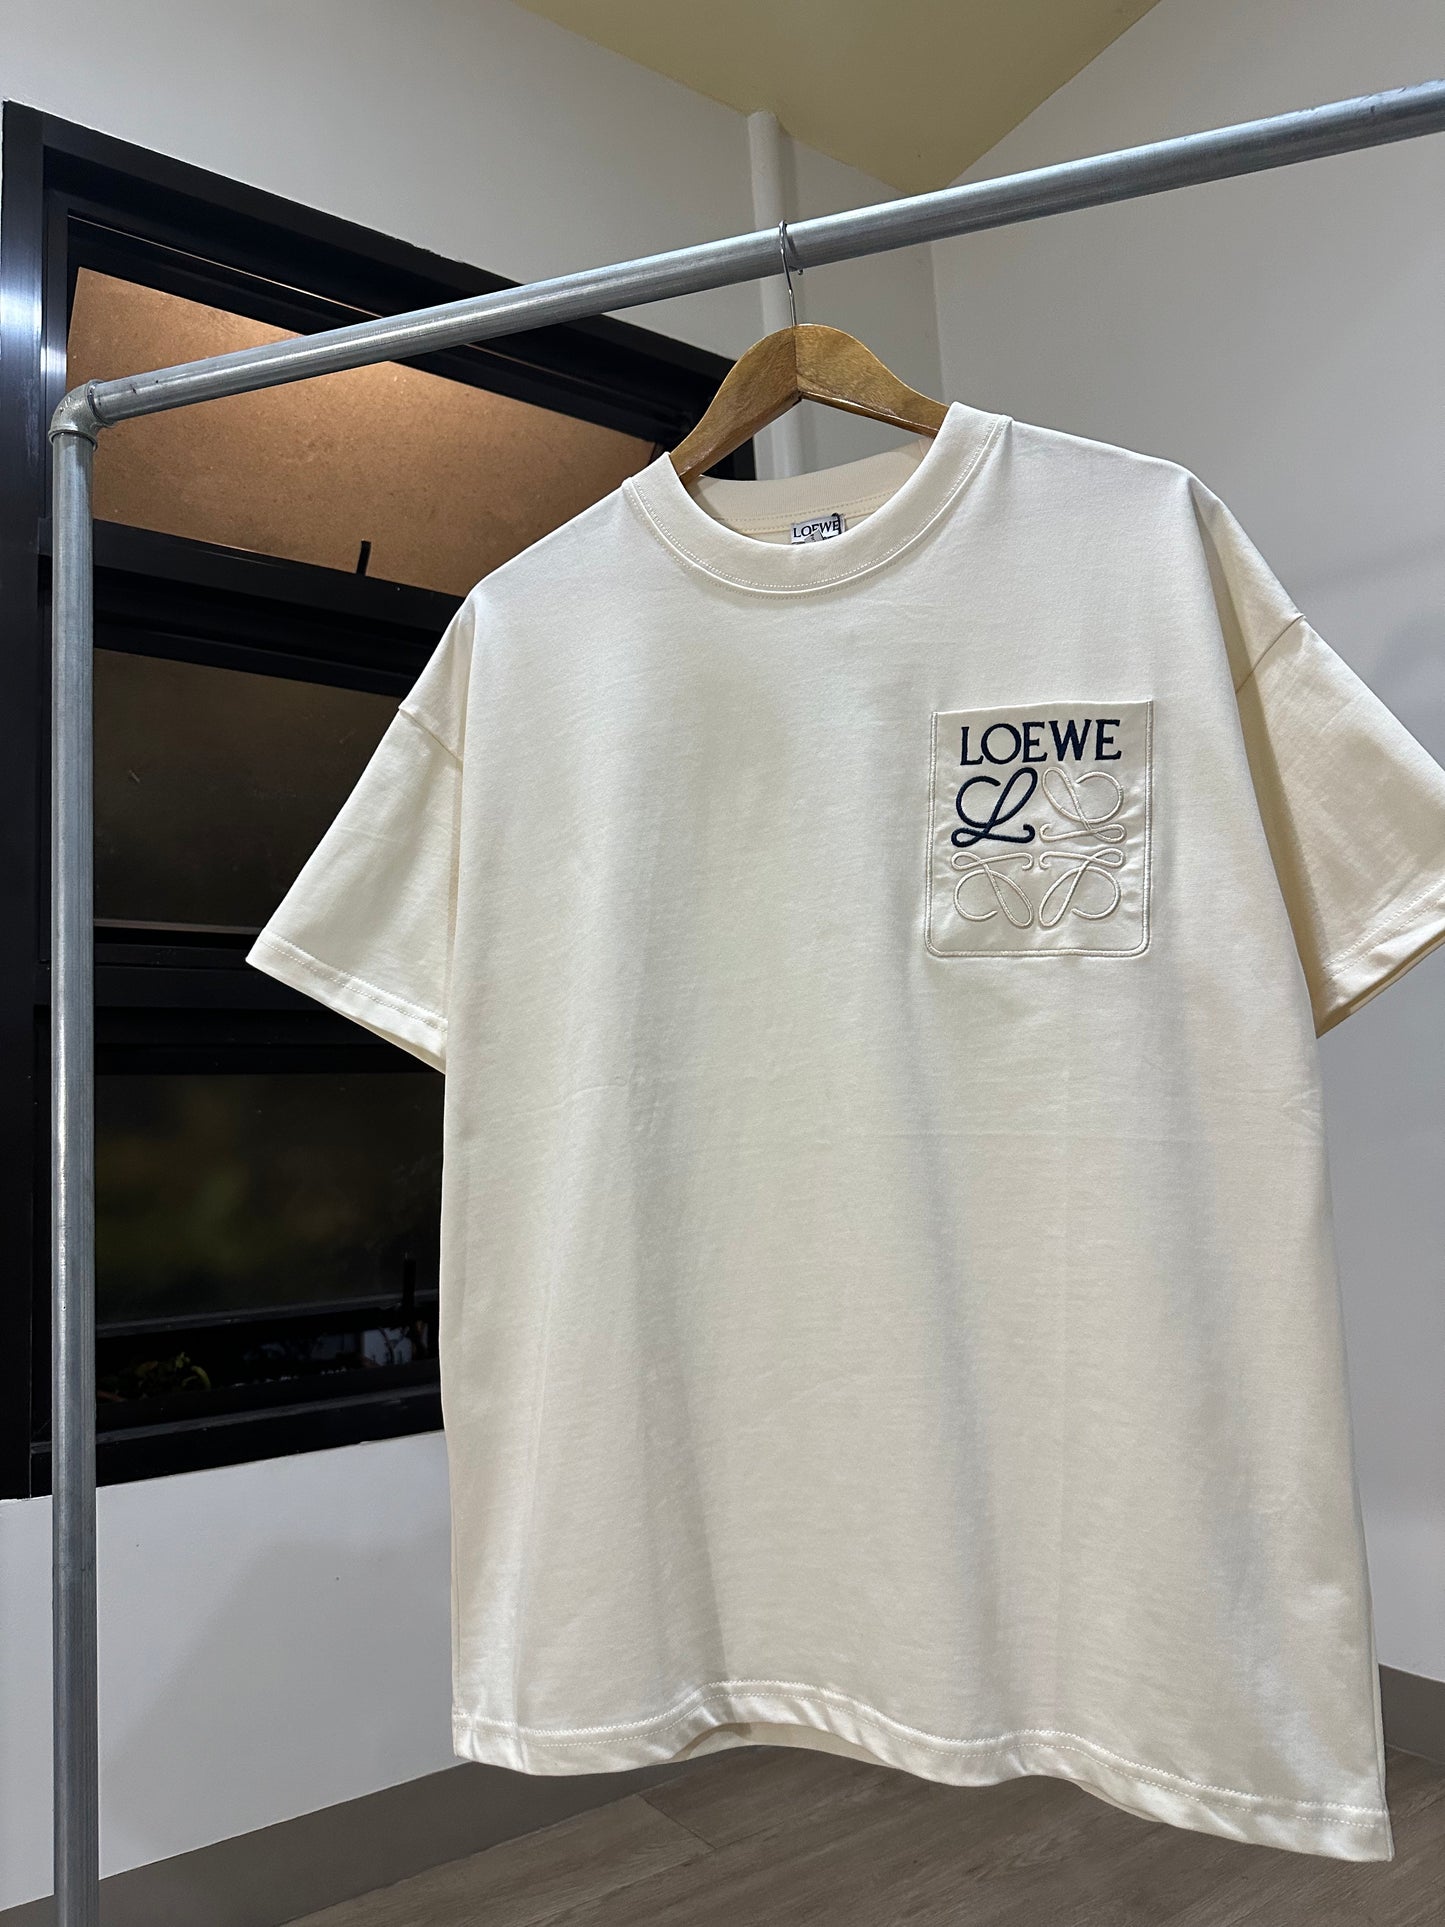 Loewe Pocket Anagram T-Shirt (Cream/Apricot)